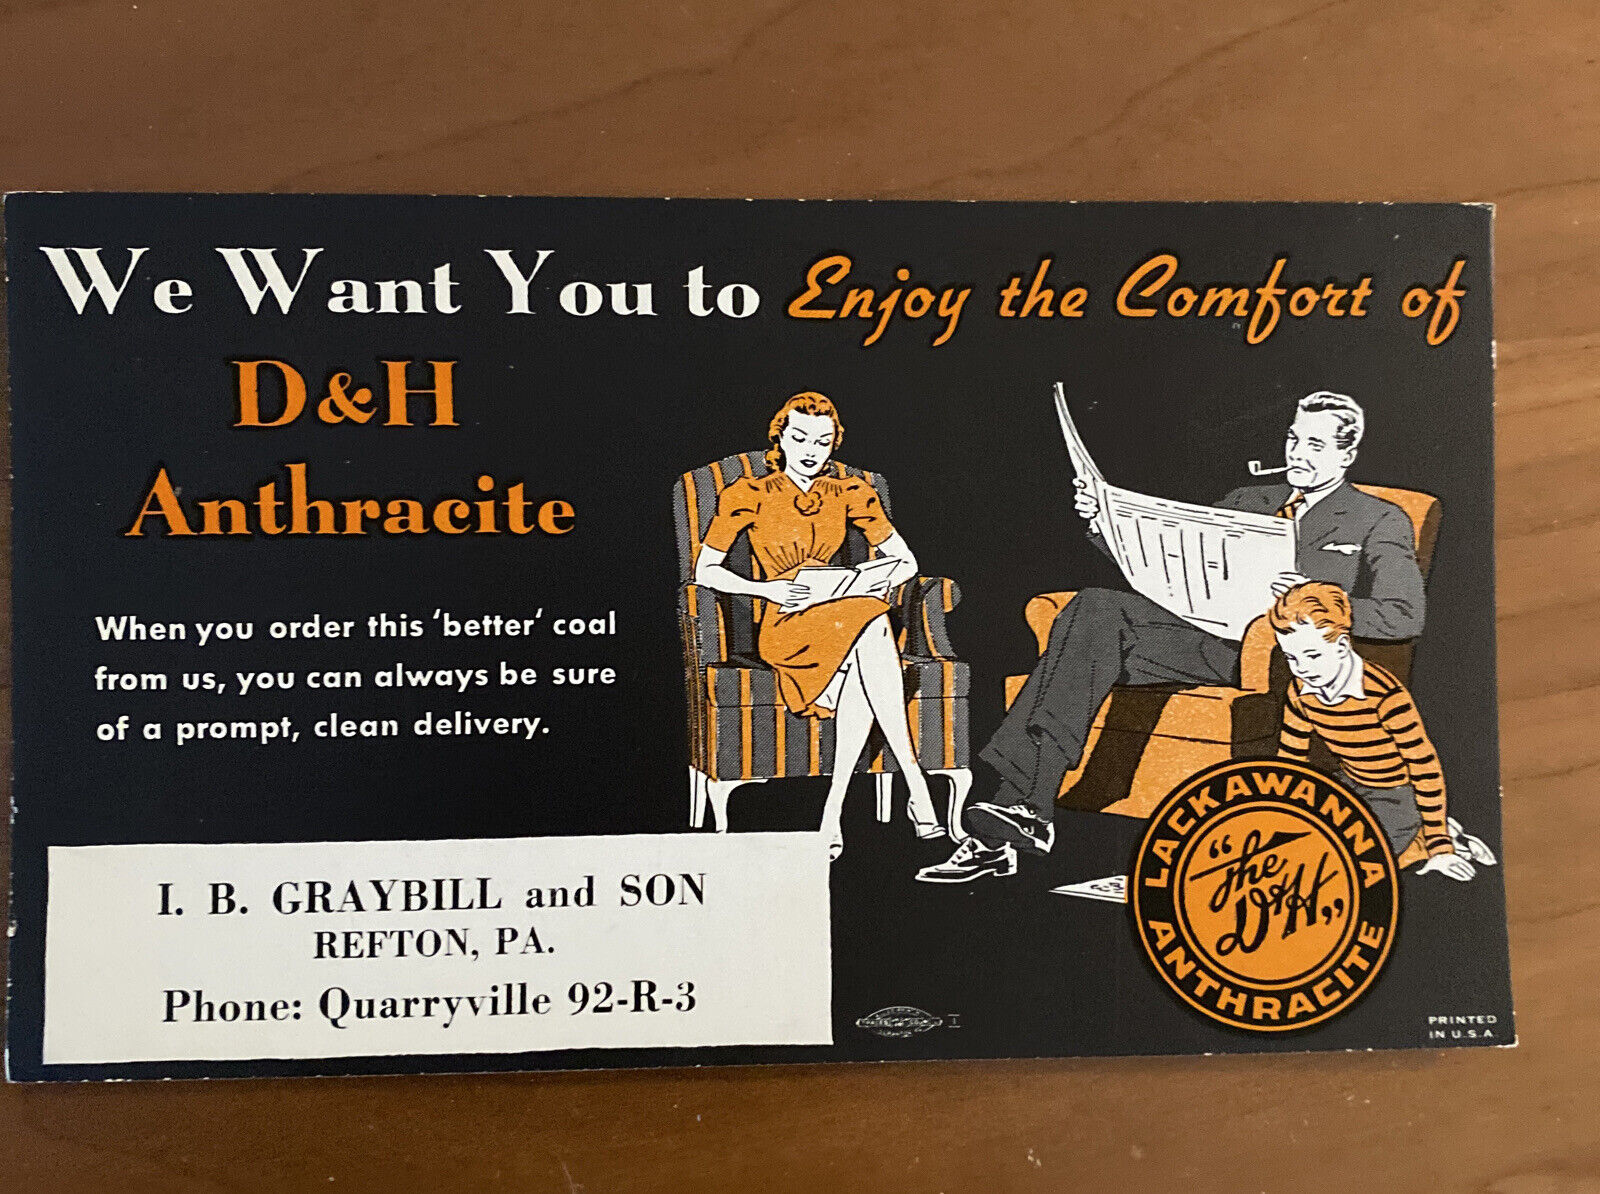 Vintage Advertising Ink Blotter Lackawanna Anthracite Coal Quarryville, PA